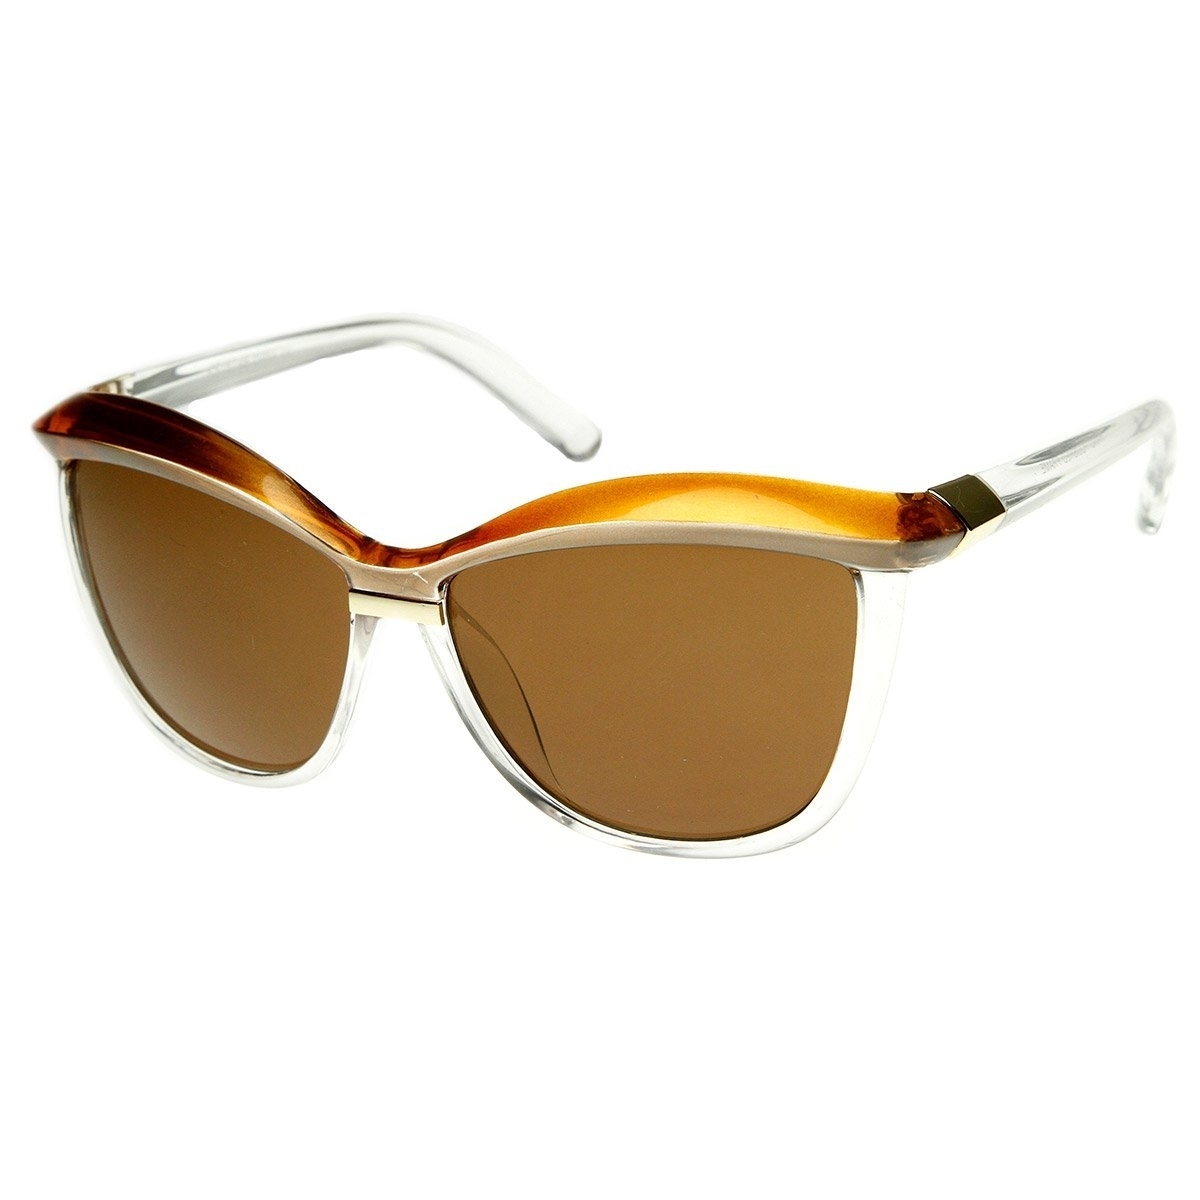 Womens Oversized Two-Tone Fashion Cat Eye Sunglasses - Brown-Tan